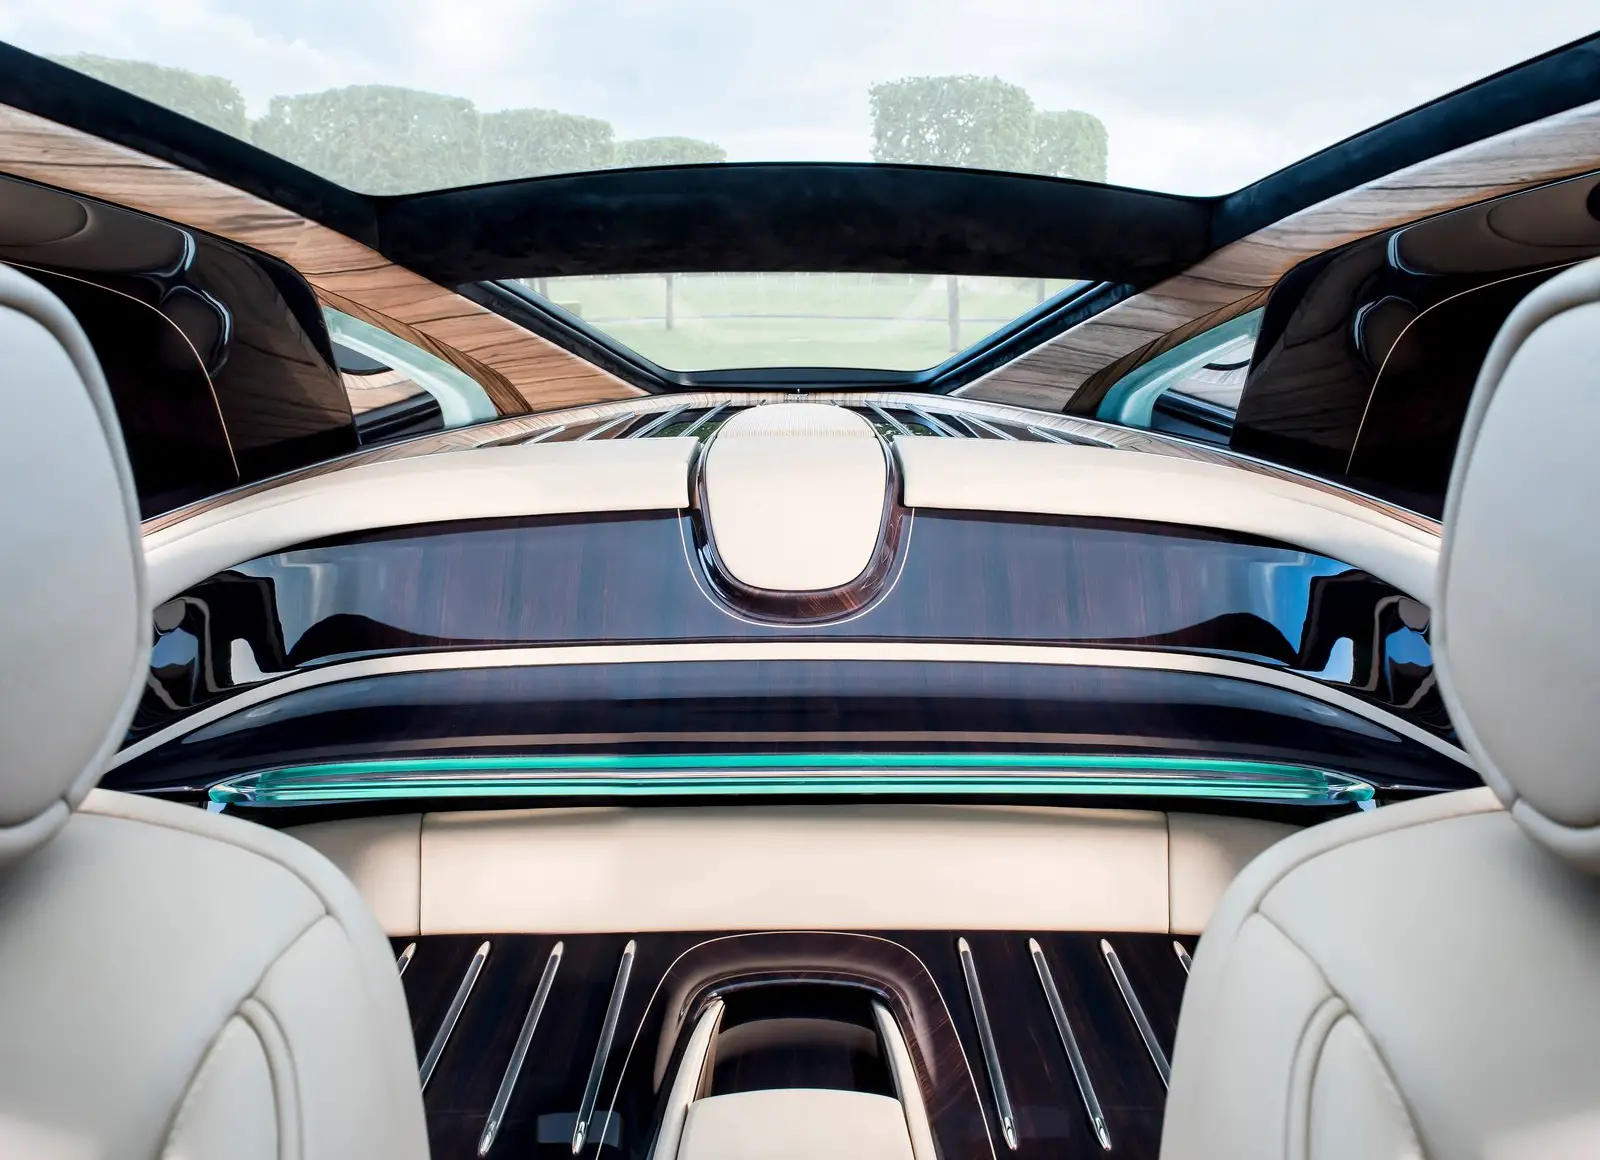 Rolls Royce Sweaptail interior view